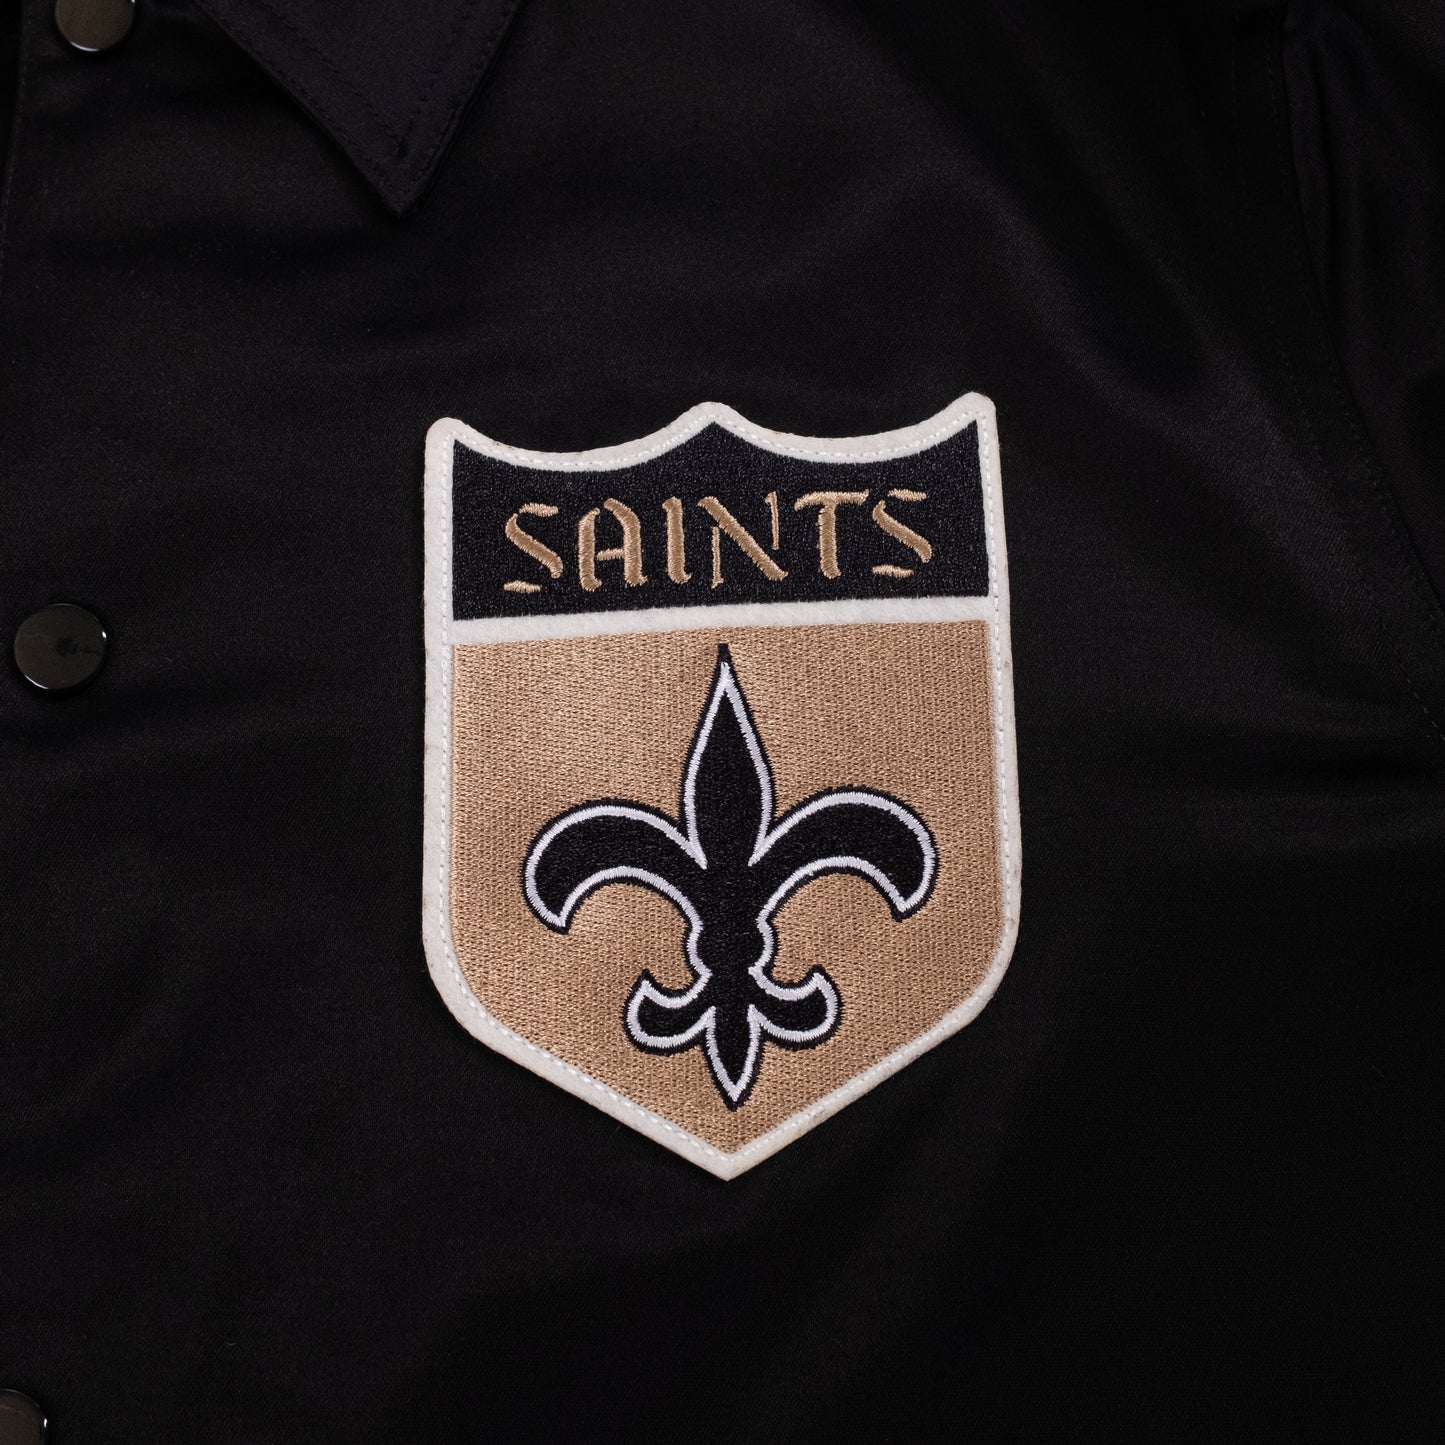 New Orleans Saints Satin Windbreaker